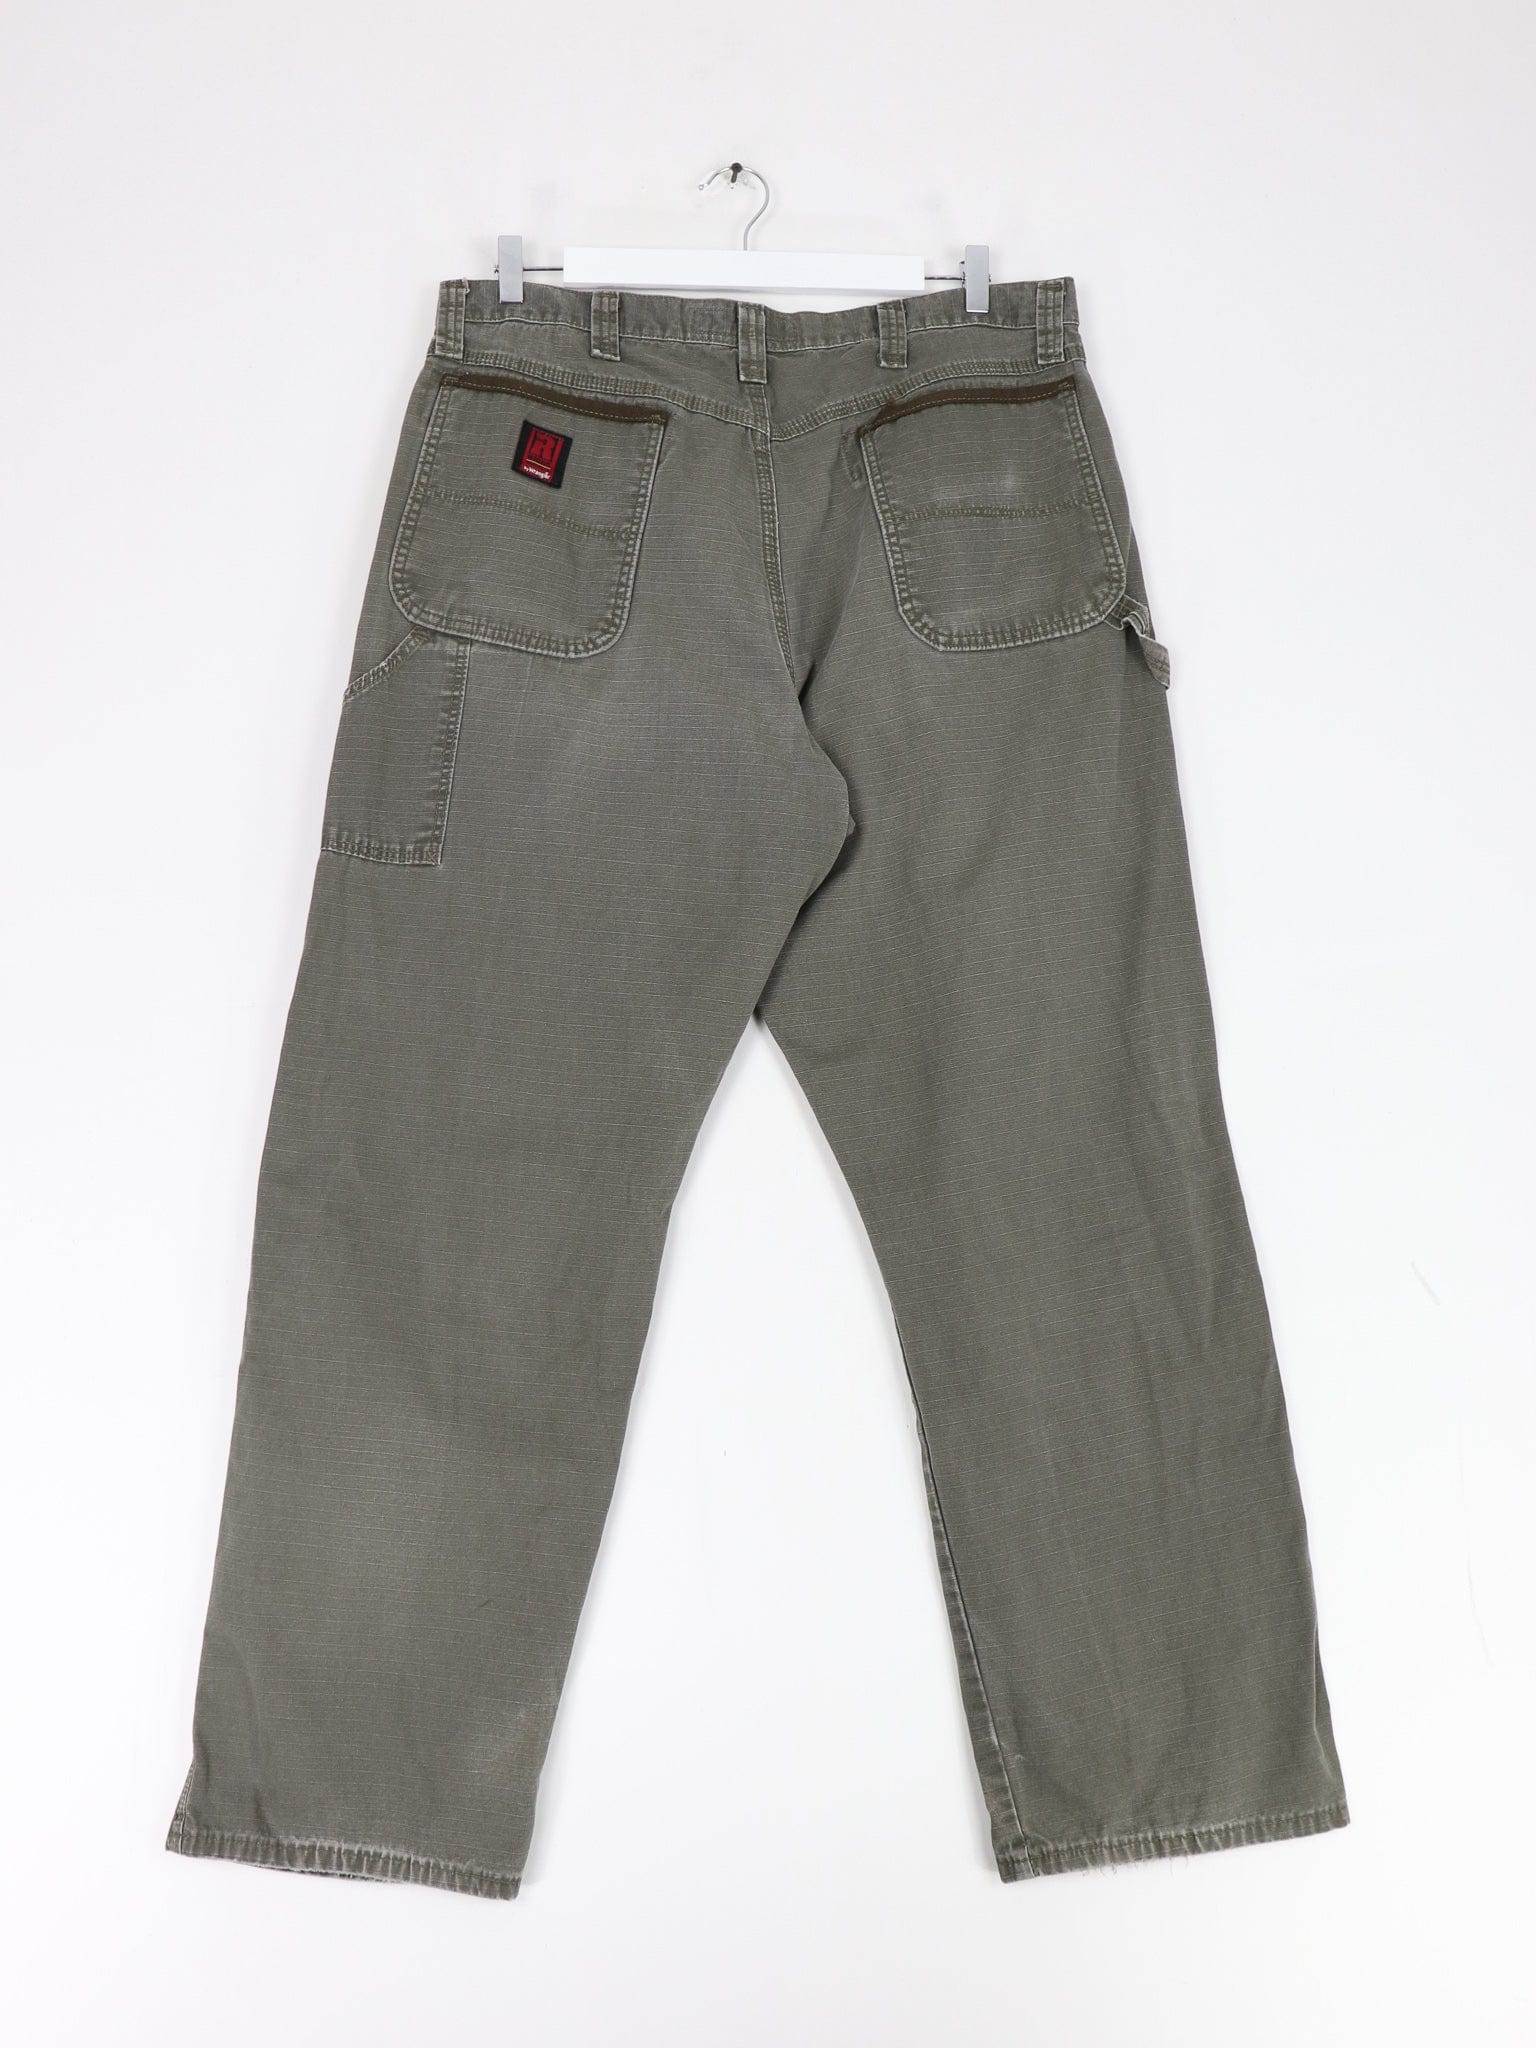 Vintage Button Fly Jeans Wrangler Twenty X Mid High 29 Waist Size